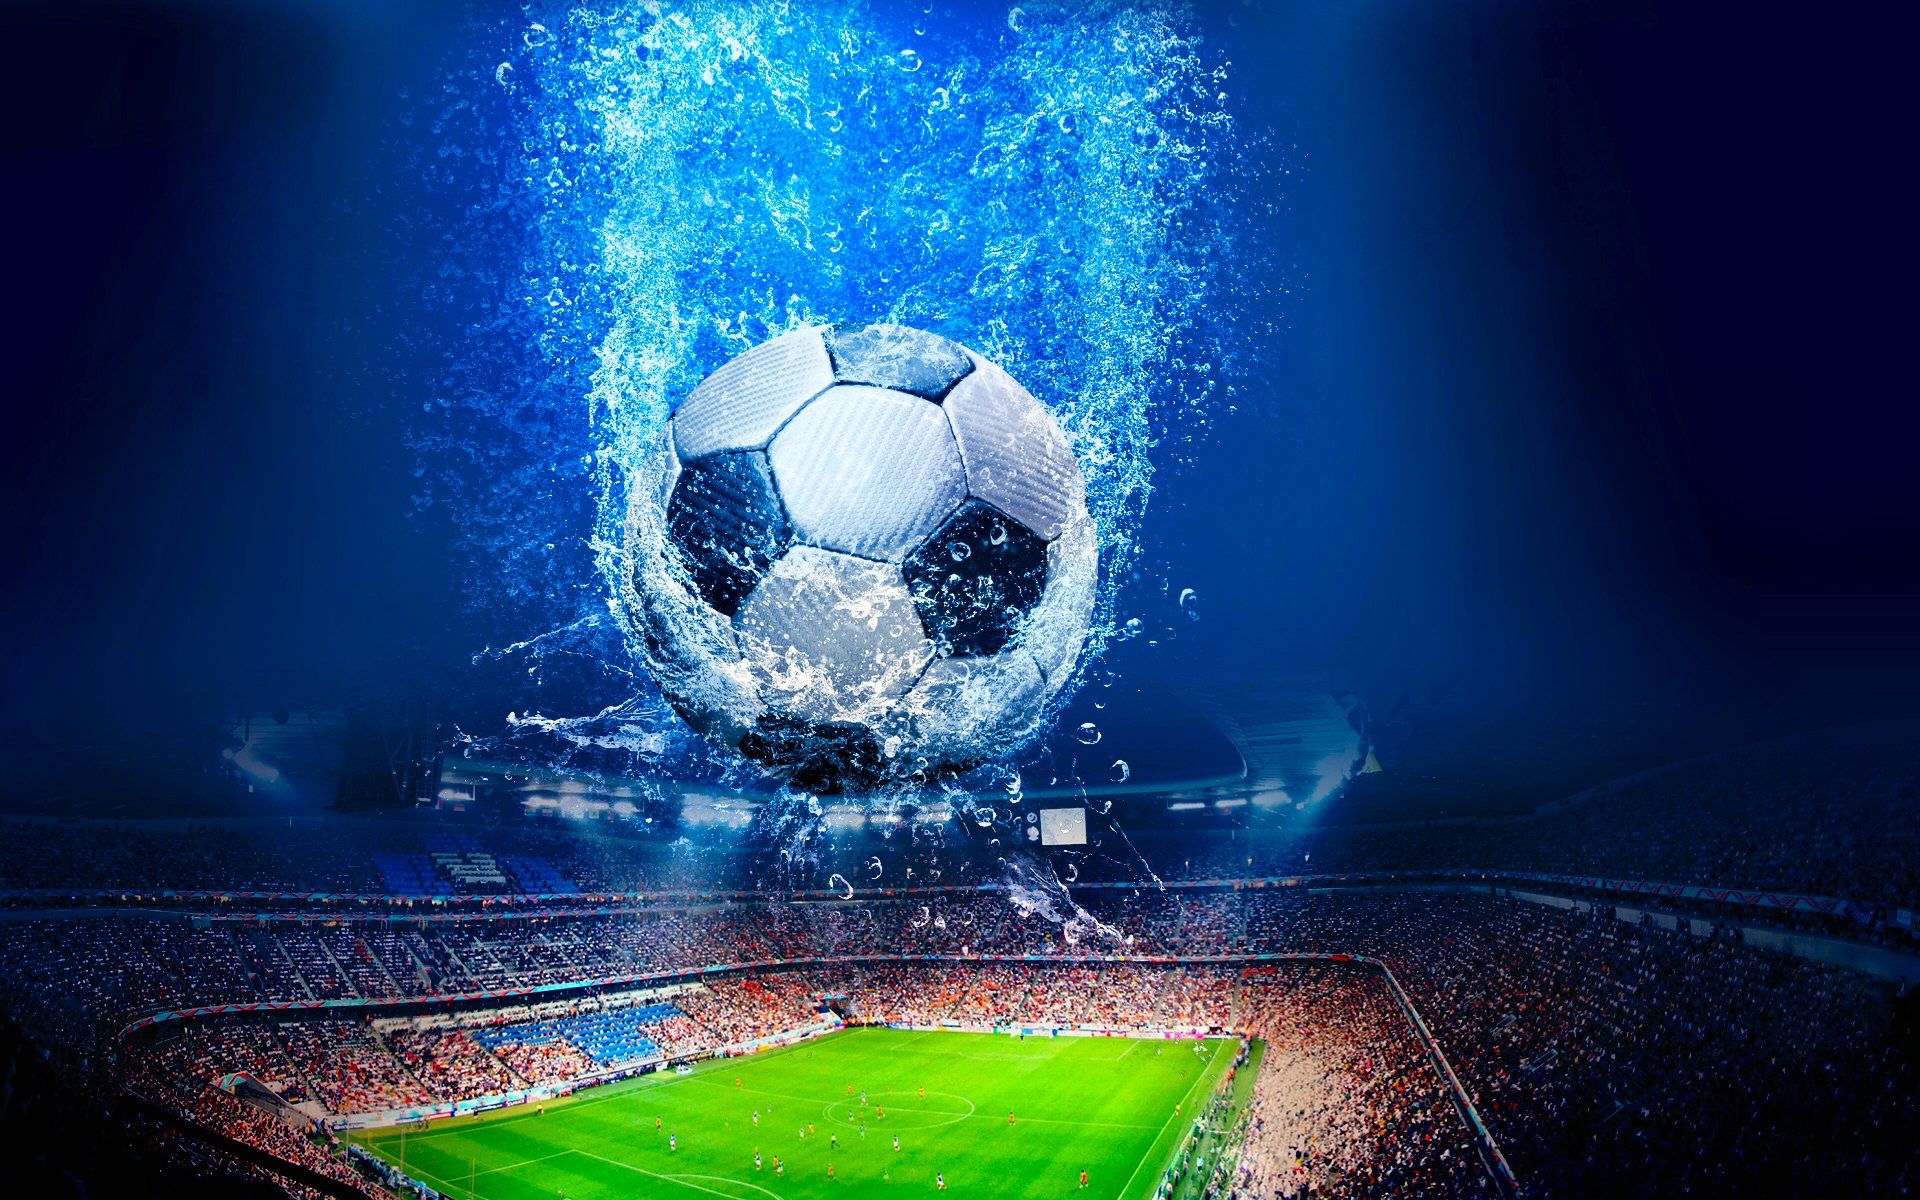 ball, fifa world cup brazil 2014, stadium, sports, splash, brazil, soccer, worldcup